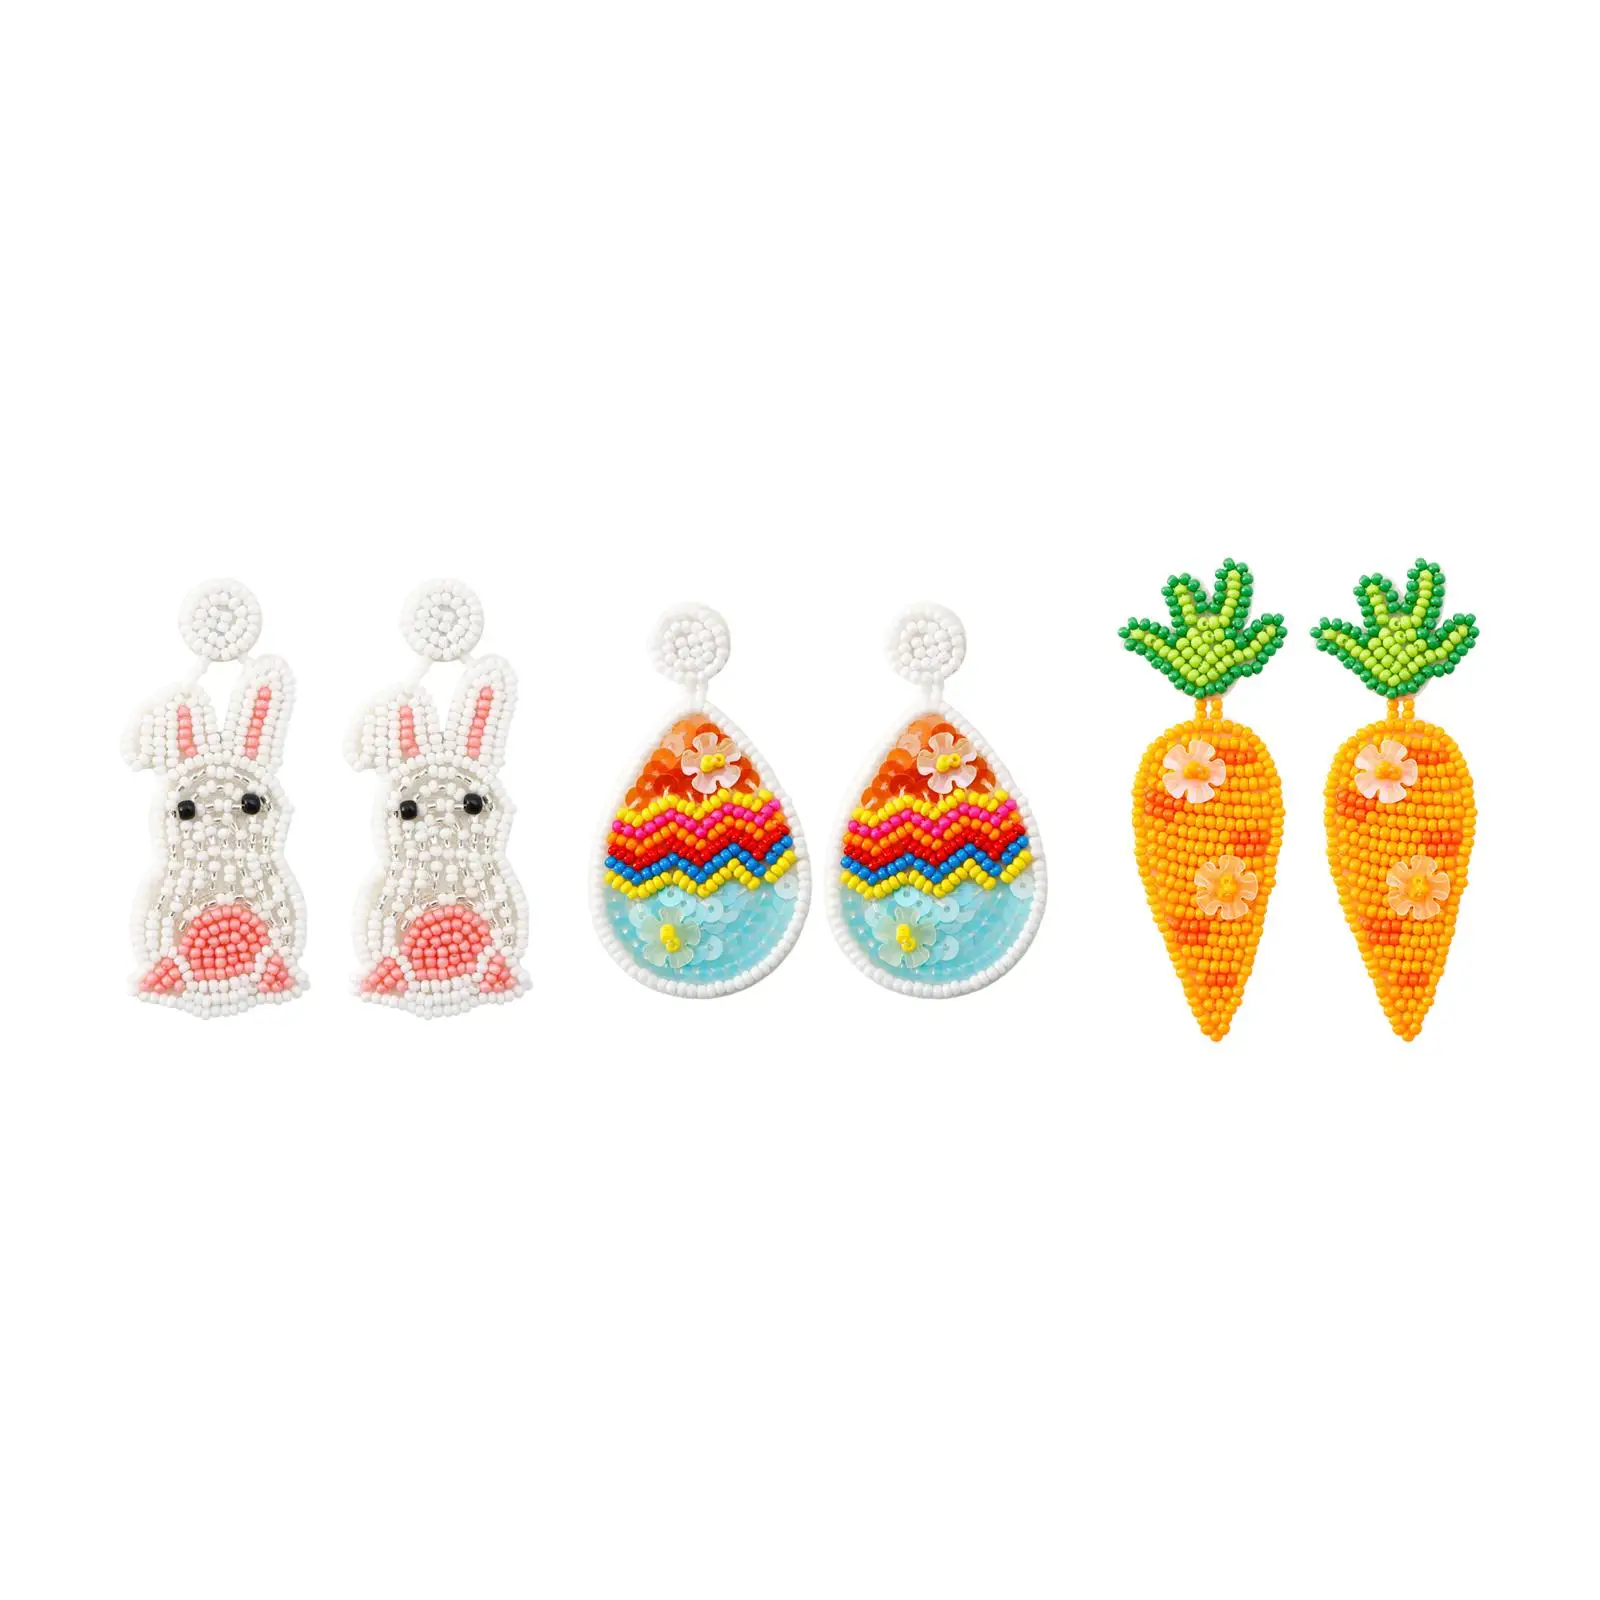 Cute Easter Earrings Easter Rabbit Dangle Drop Earrings Rabbit Dangle Earrings for Girls Family Mother Teens Jewelry Gifts